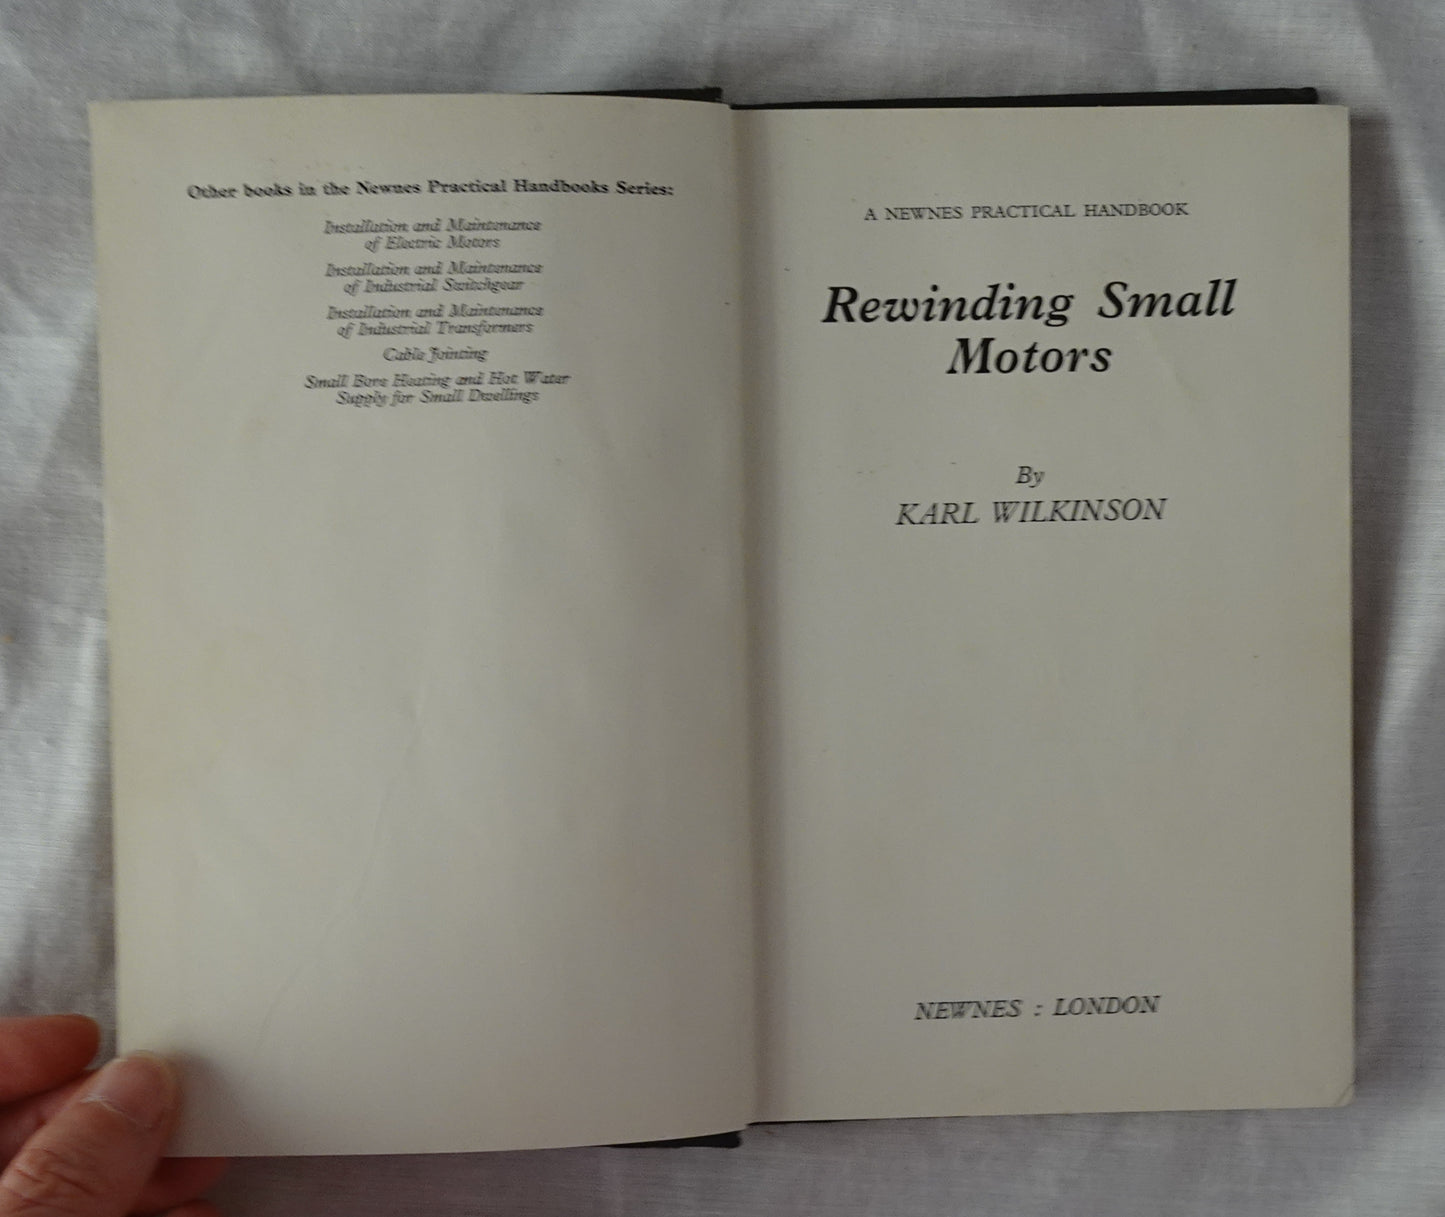 Rewinding Small Motors by Karl Wilkinson